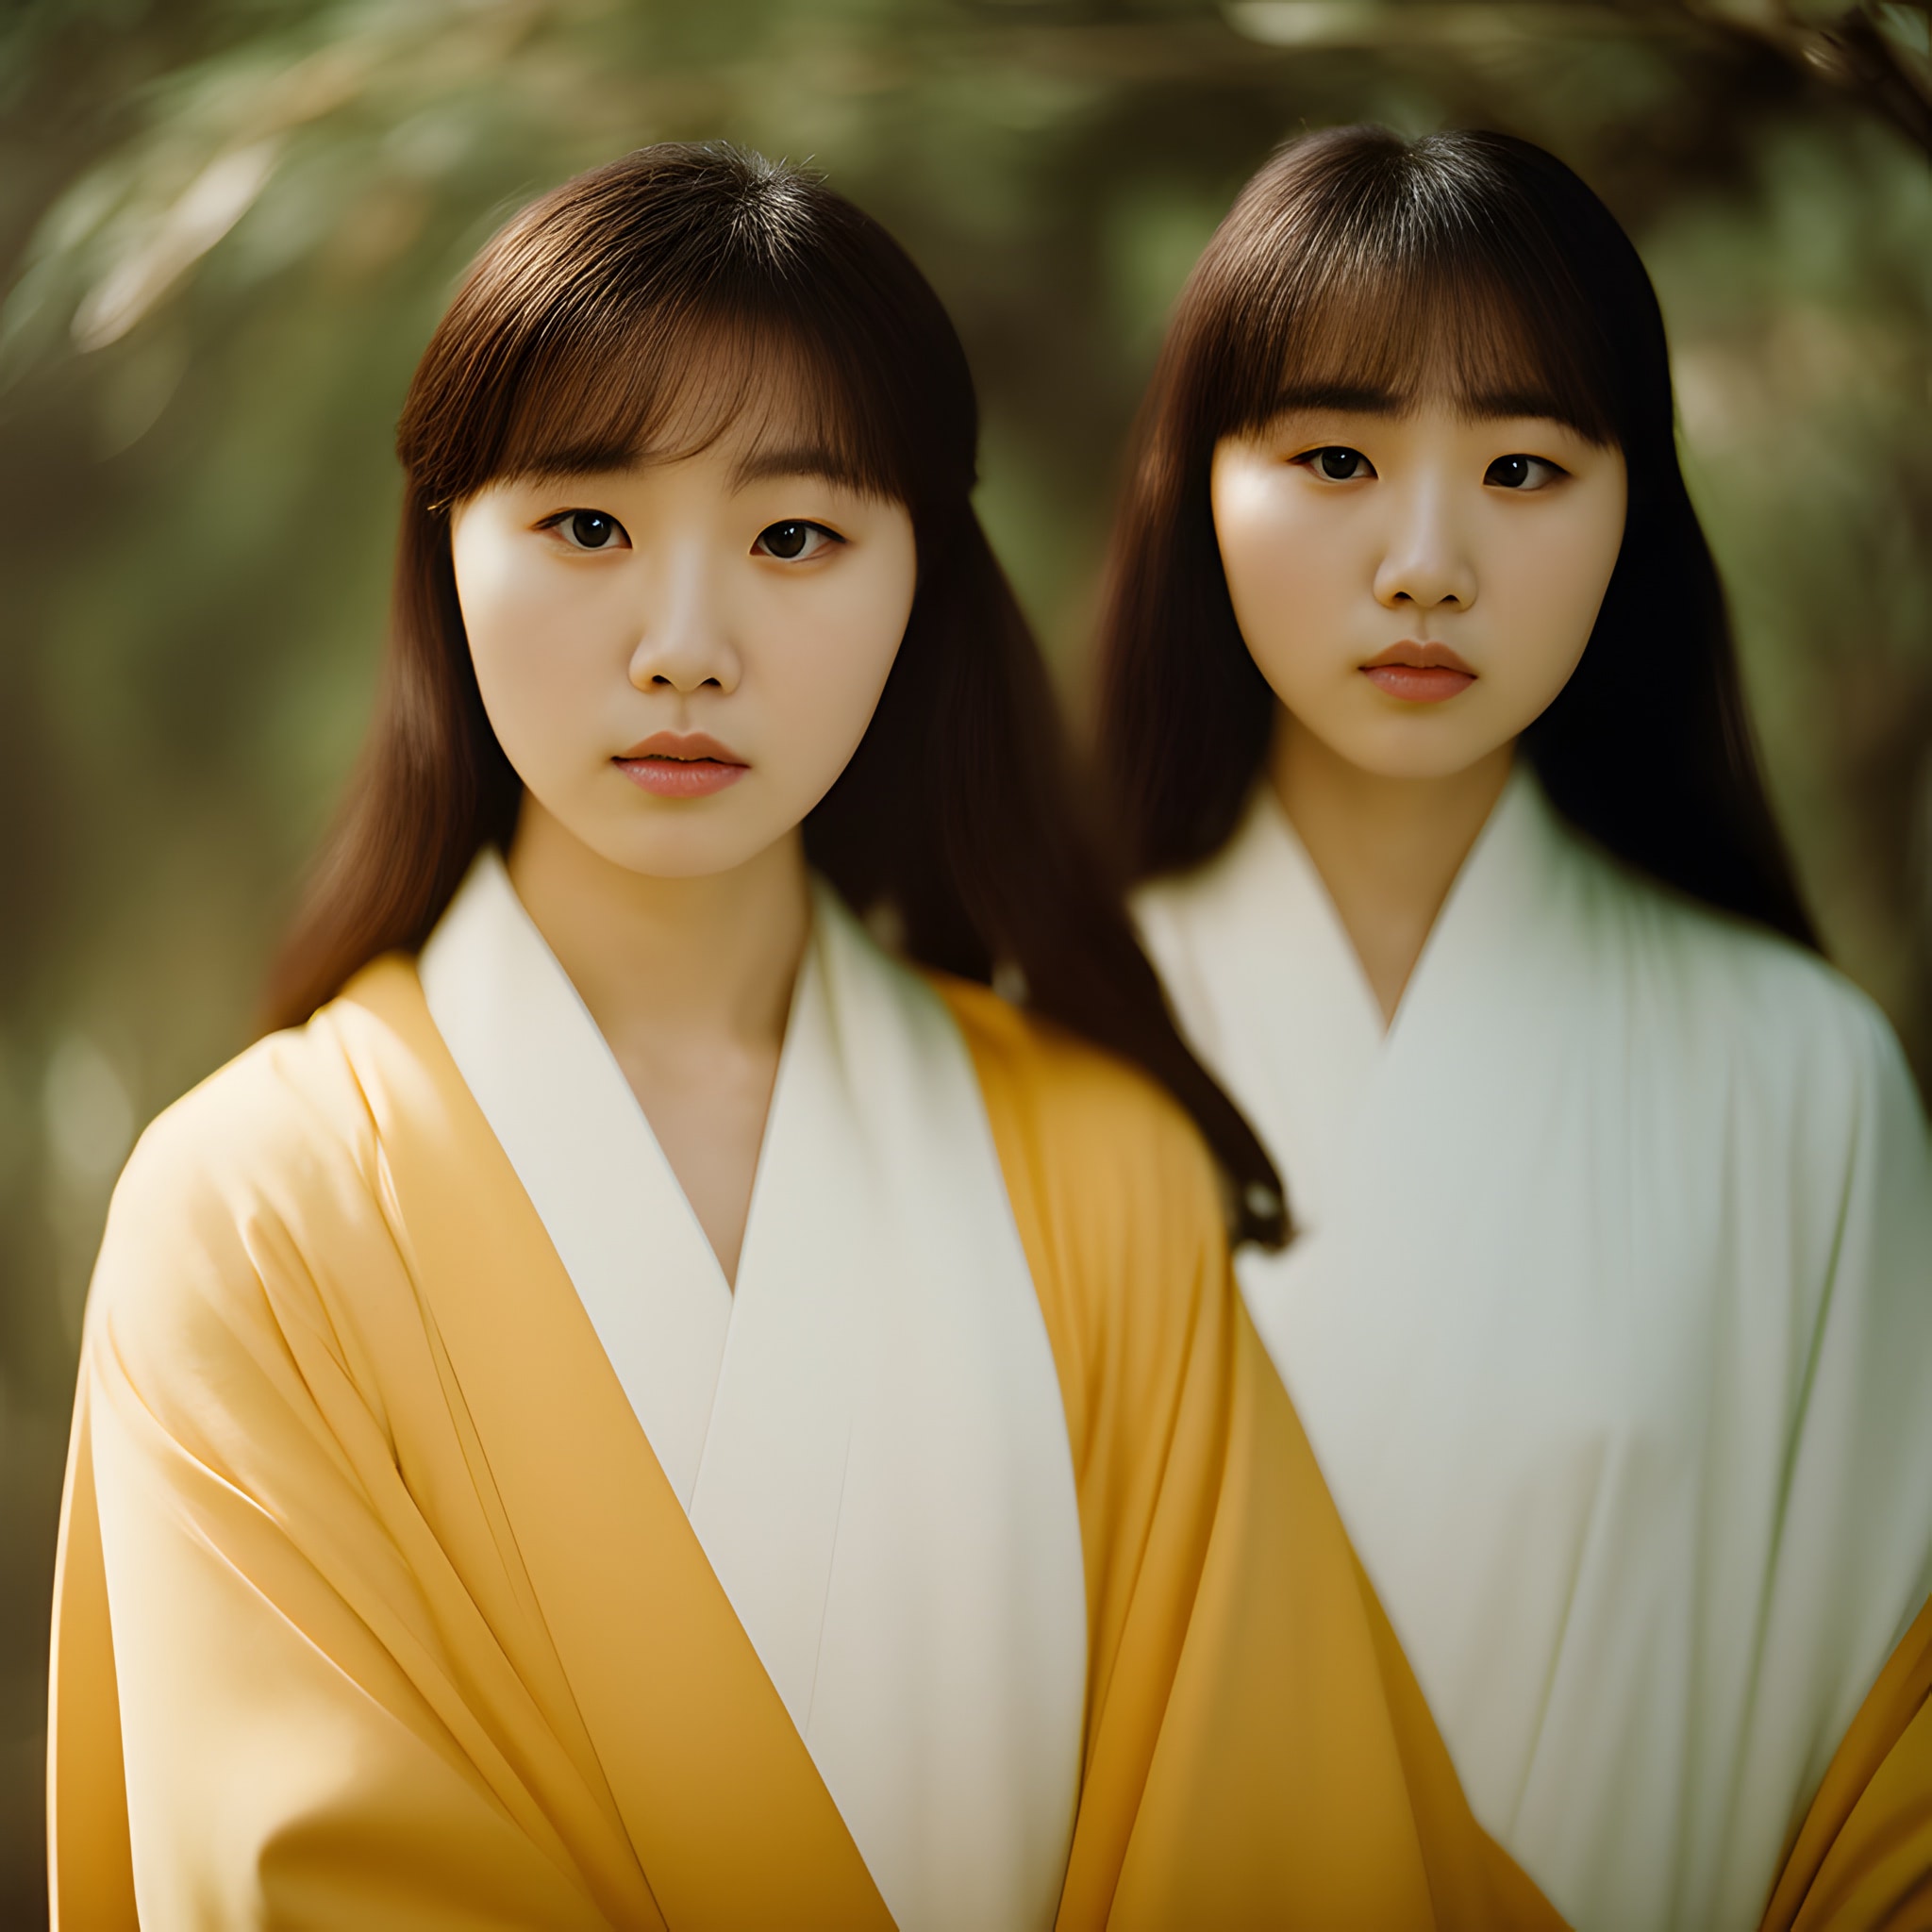 Photo-taken-on-a-Hasselblad-camera-Korean-female-4siq